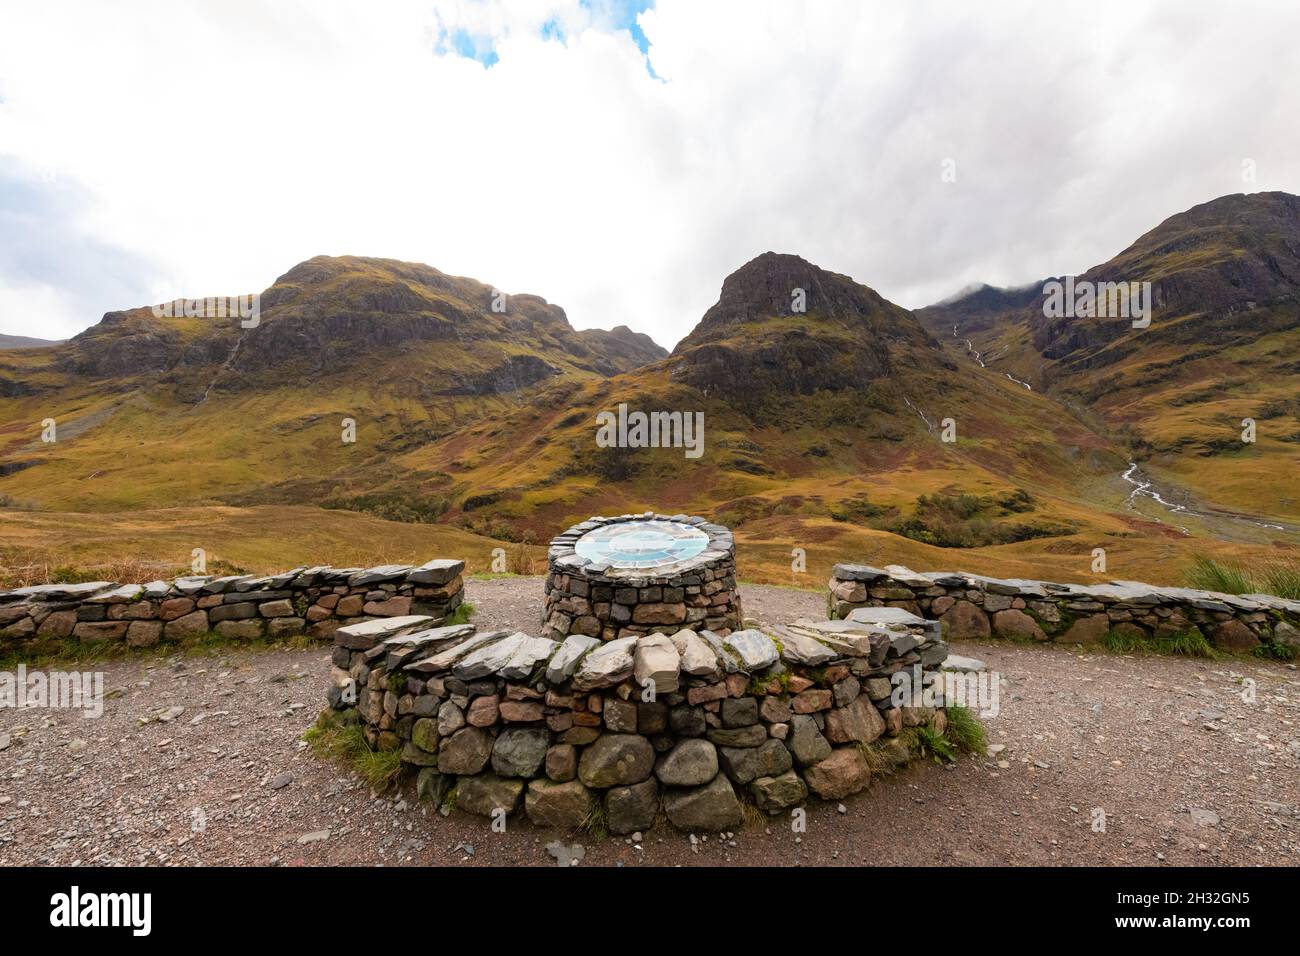 Three Sisters Viewpoint - Glen Coe - Scotland, UK Stock Photo